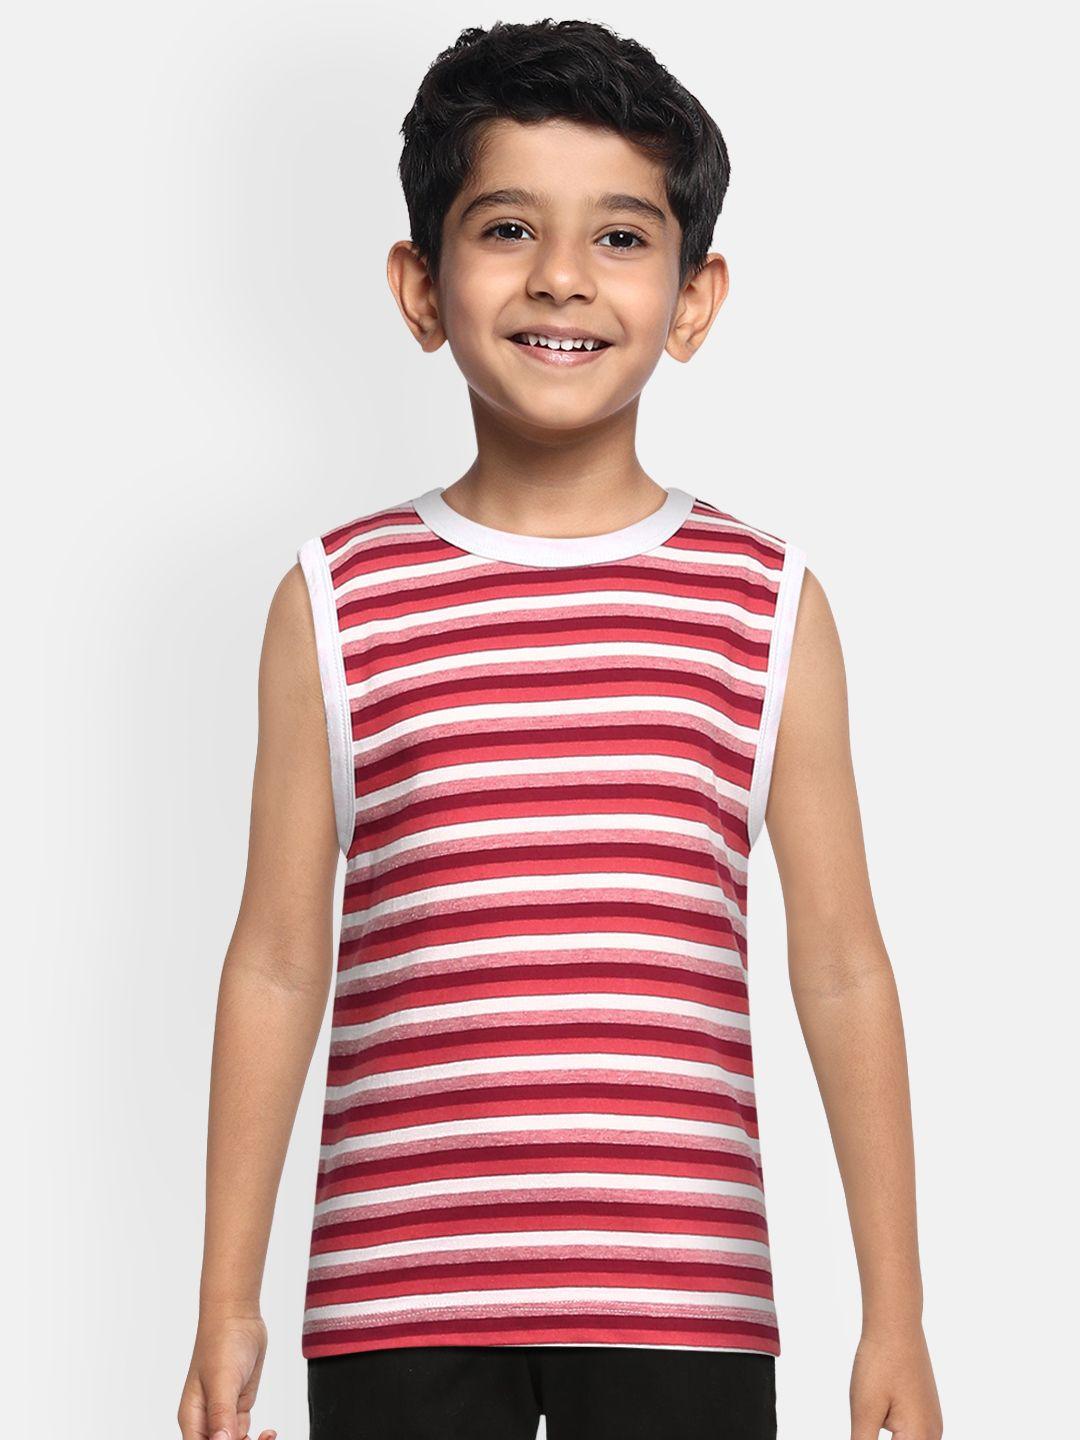 metro kids company boys red & white striped t-shirt